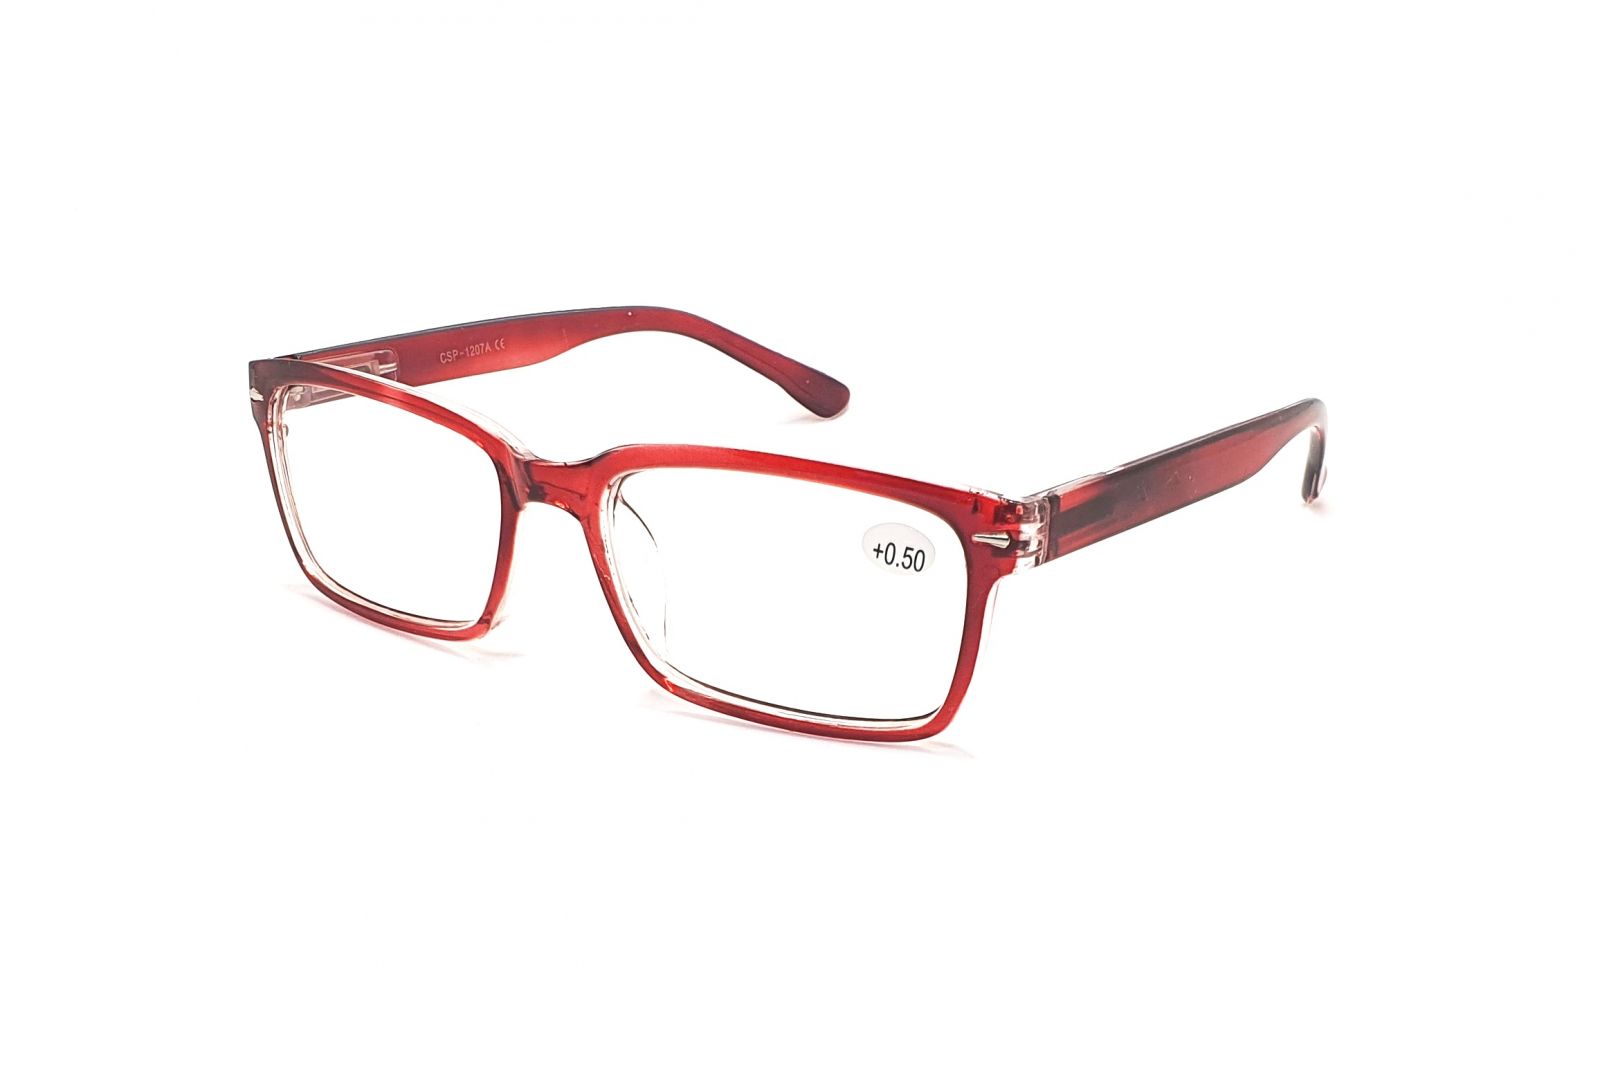 Dioptrické brýle CSP-1207 / +0,50 flex red